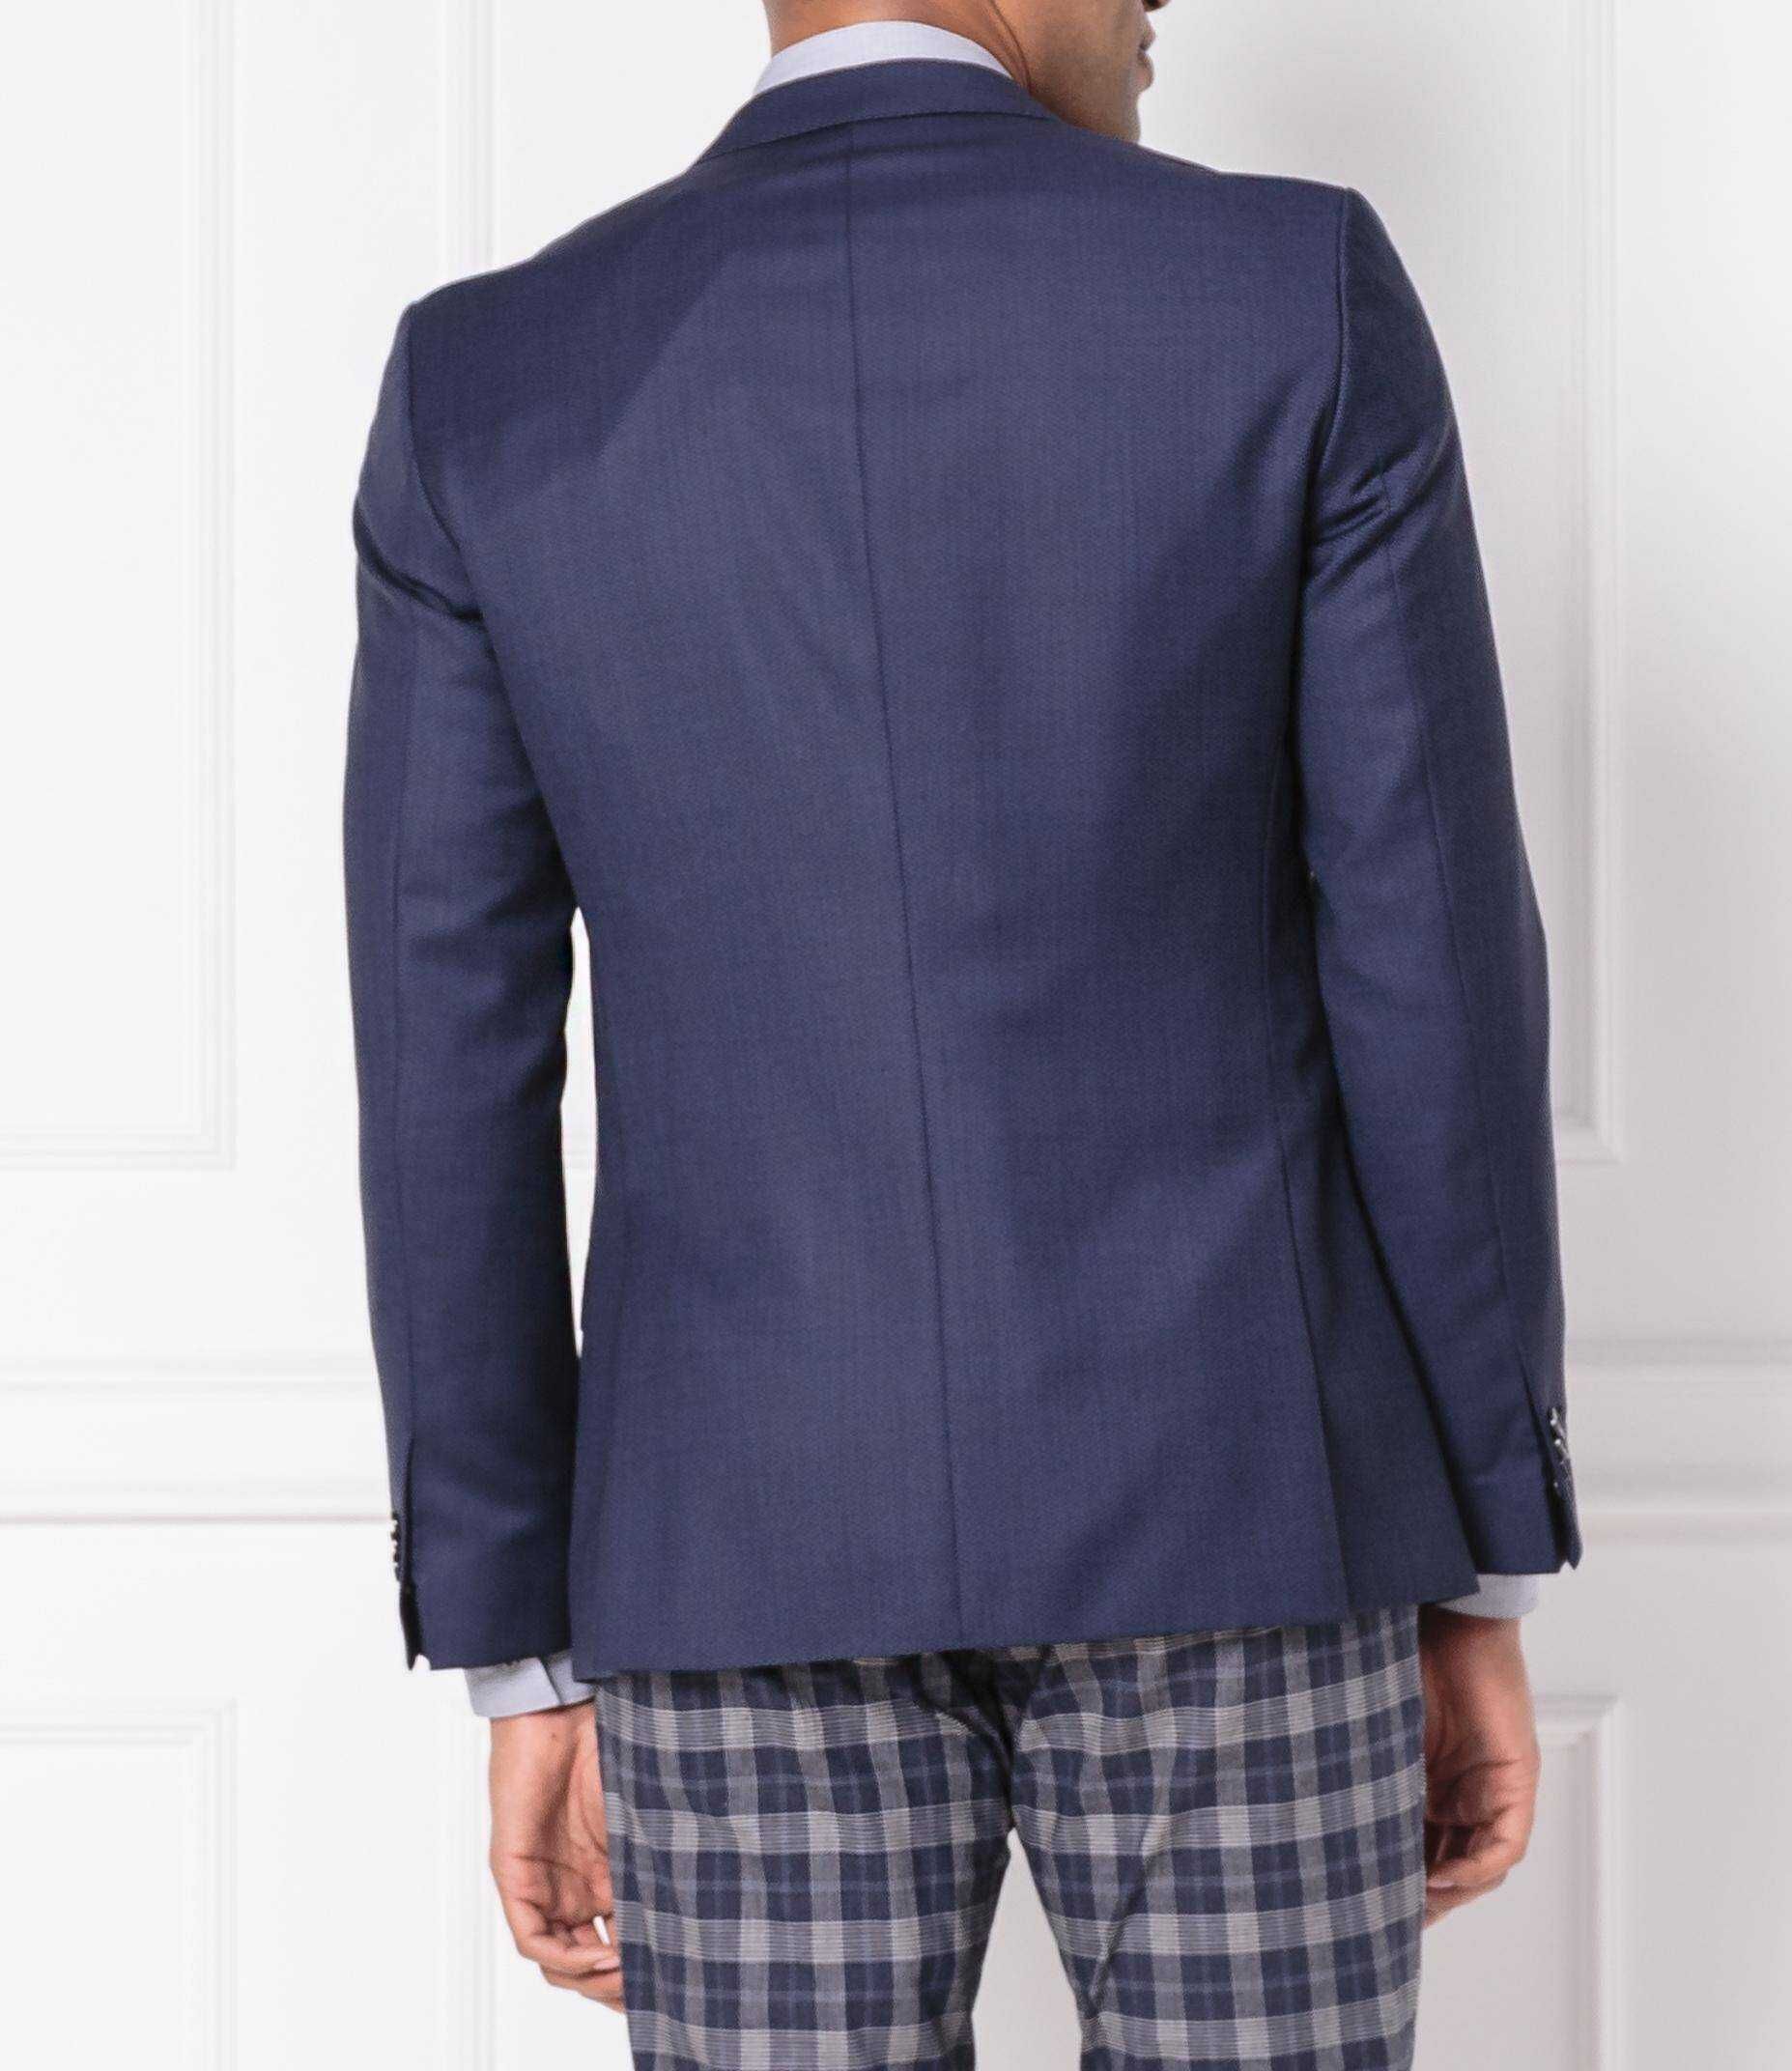 Sacou blazer slim 48 M premium Atelier Torino Vestus lana de alpaca